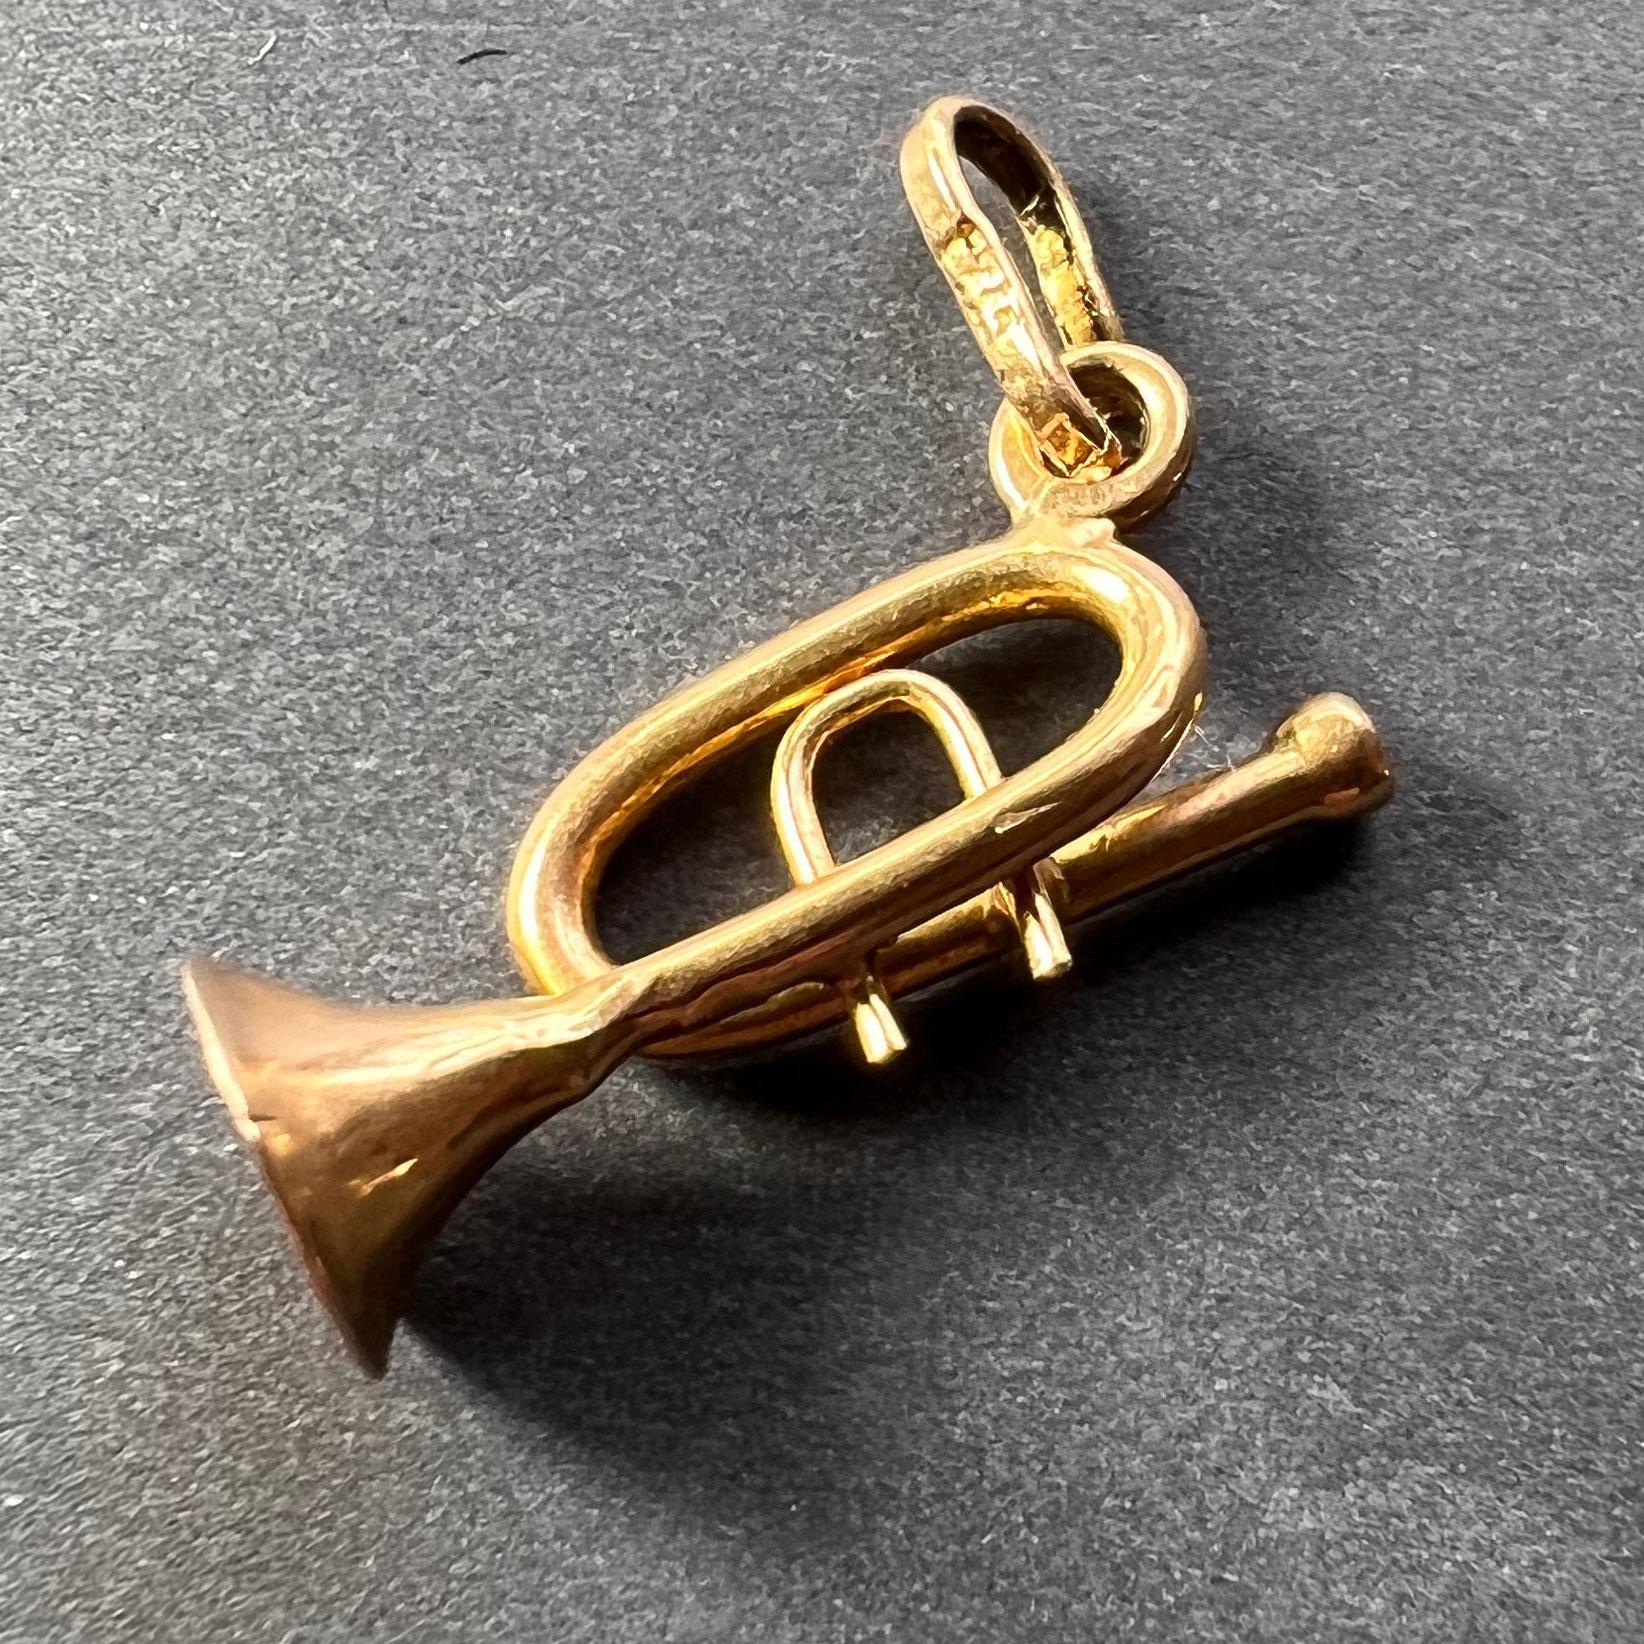 dimensions of a trumpet